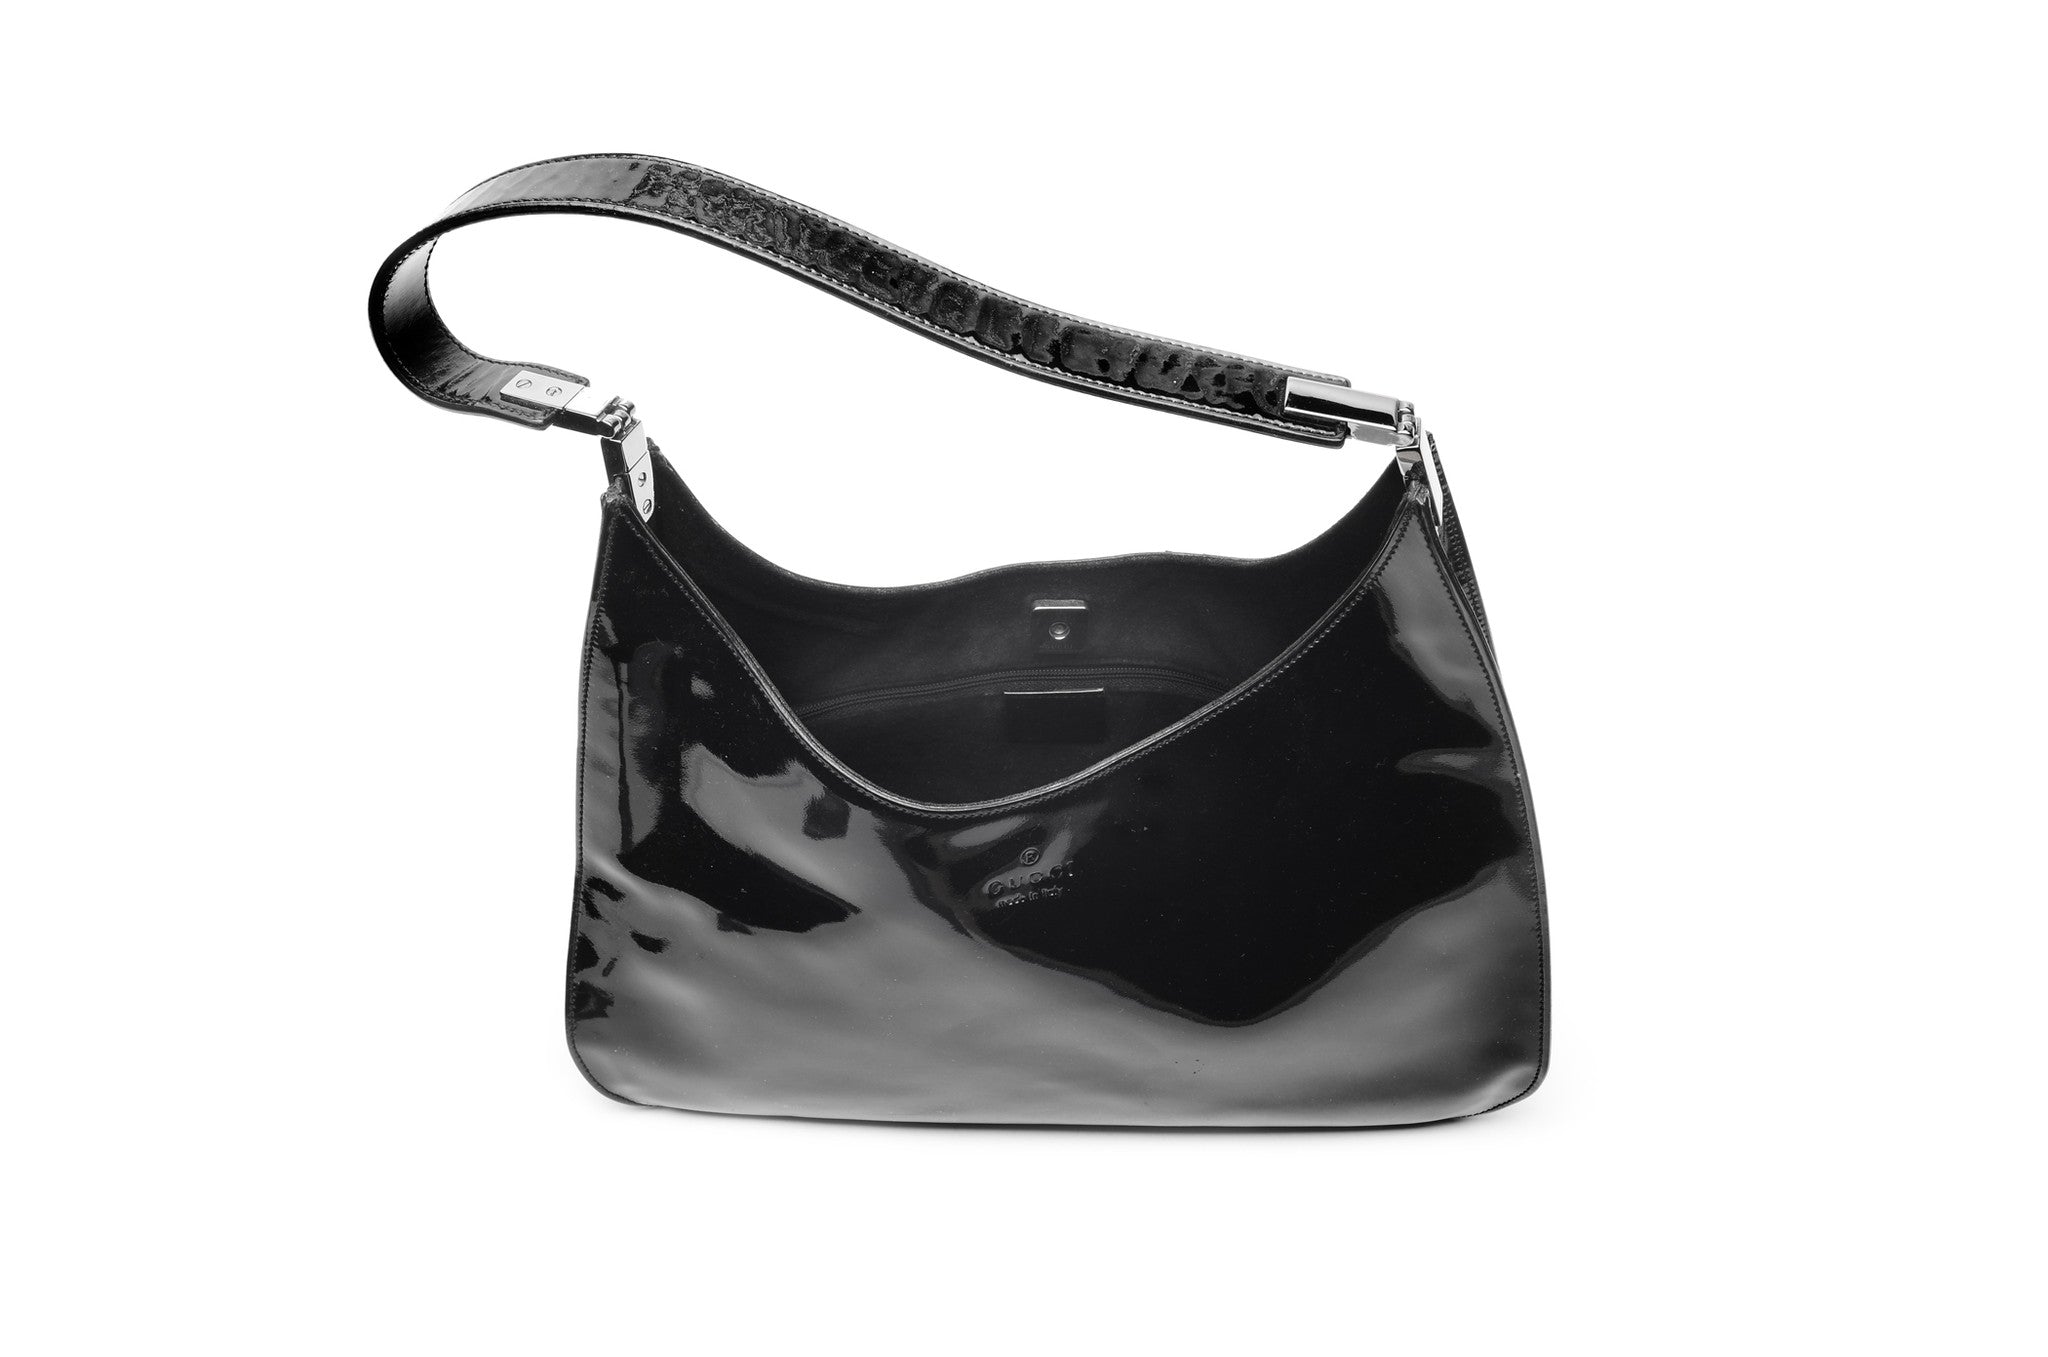 gucci black patent leather handbag